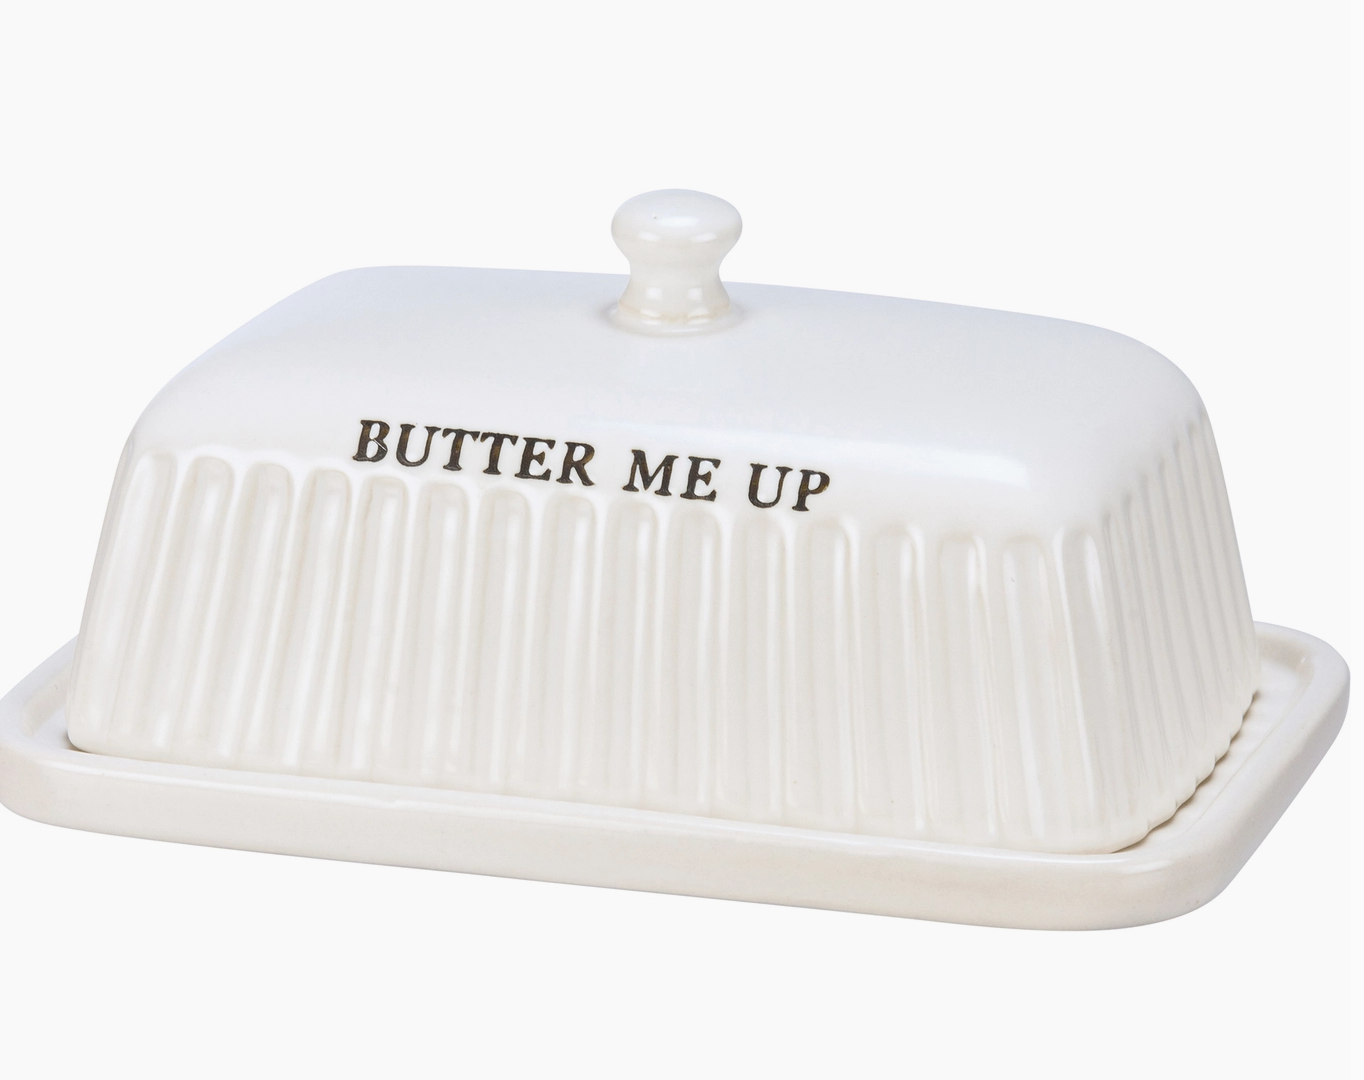 Butter Me Up Butter Dish